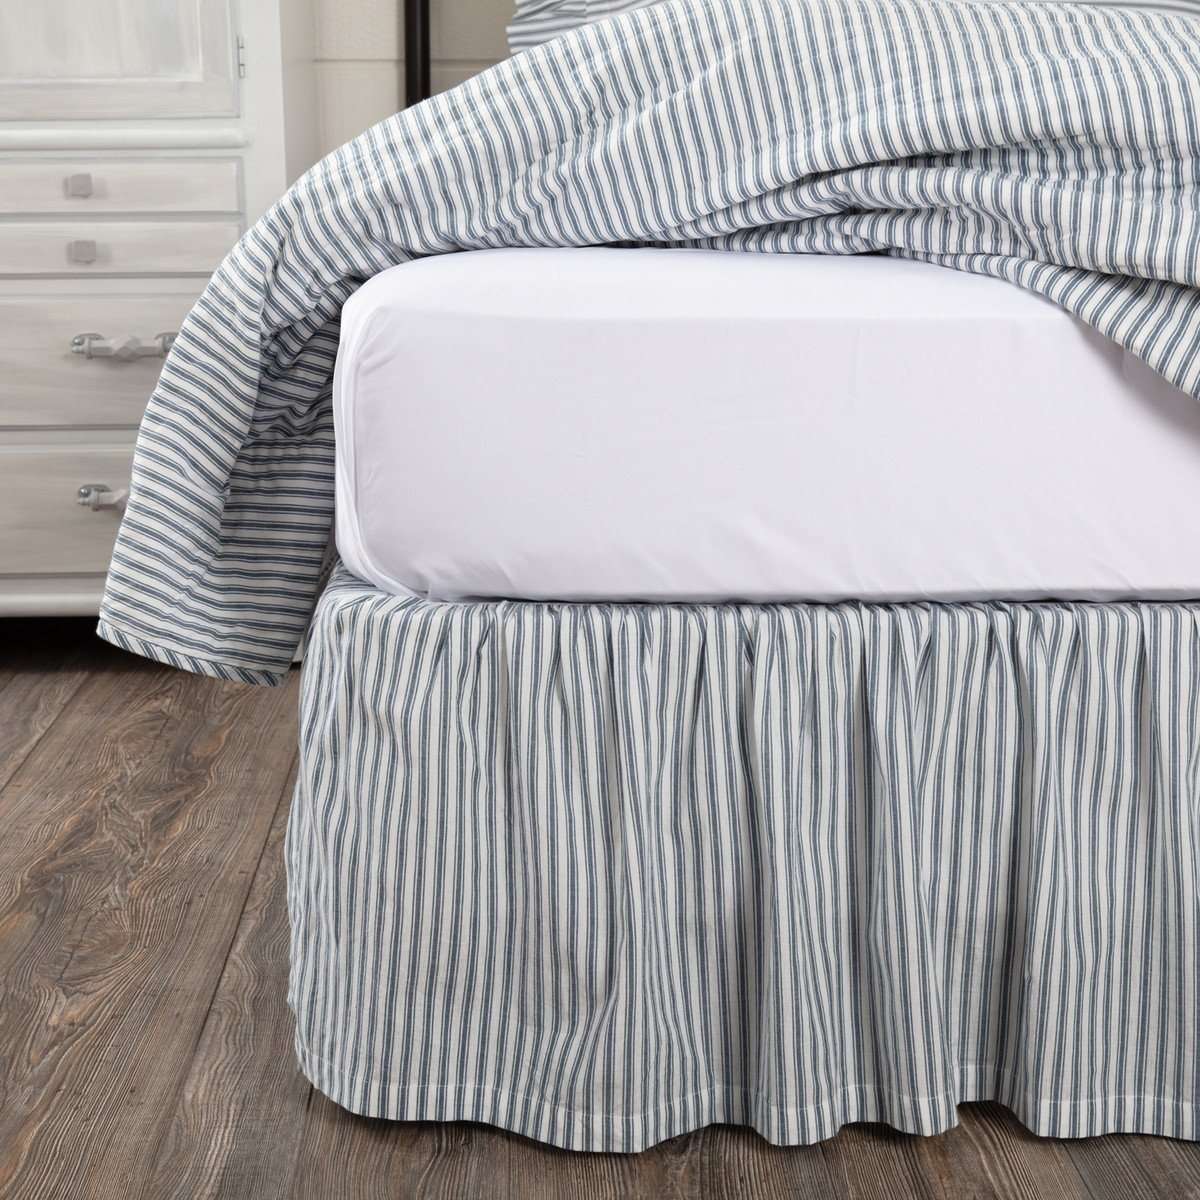 Sawyer Mill Blue Ticking Stripe Bed Skirts VHC Brands - The Fox Decor